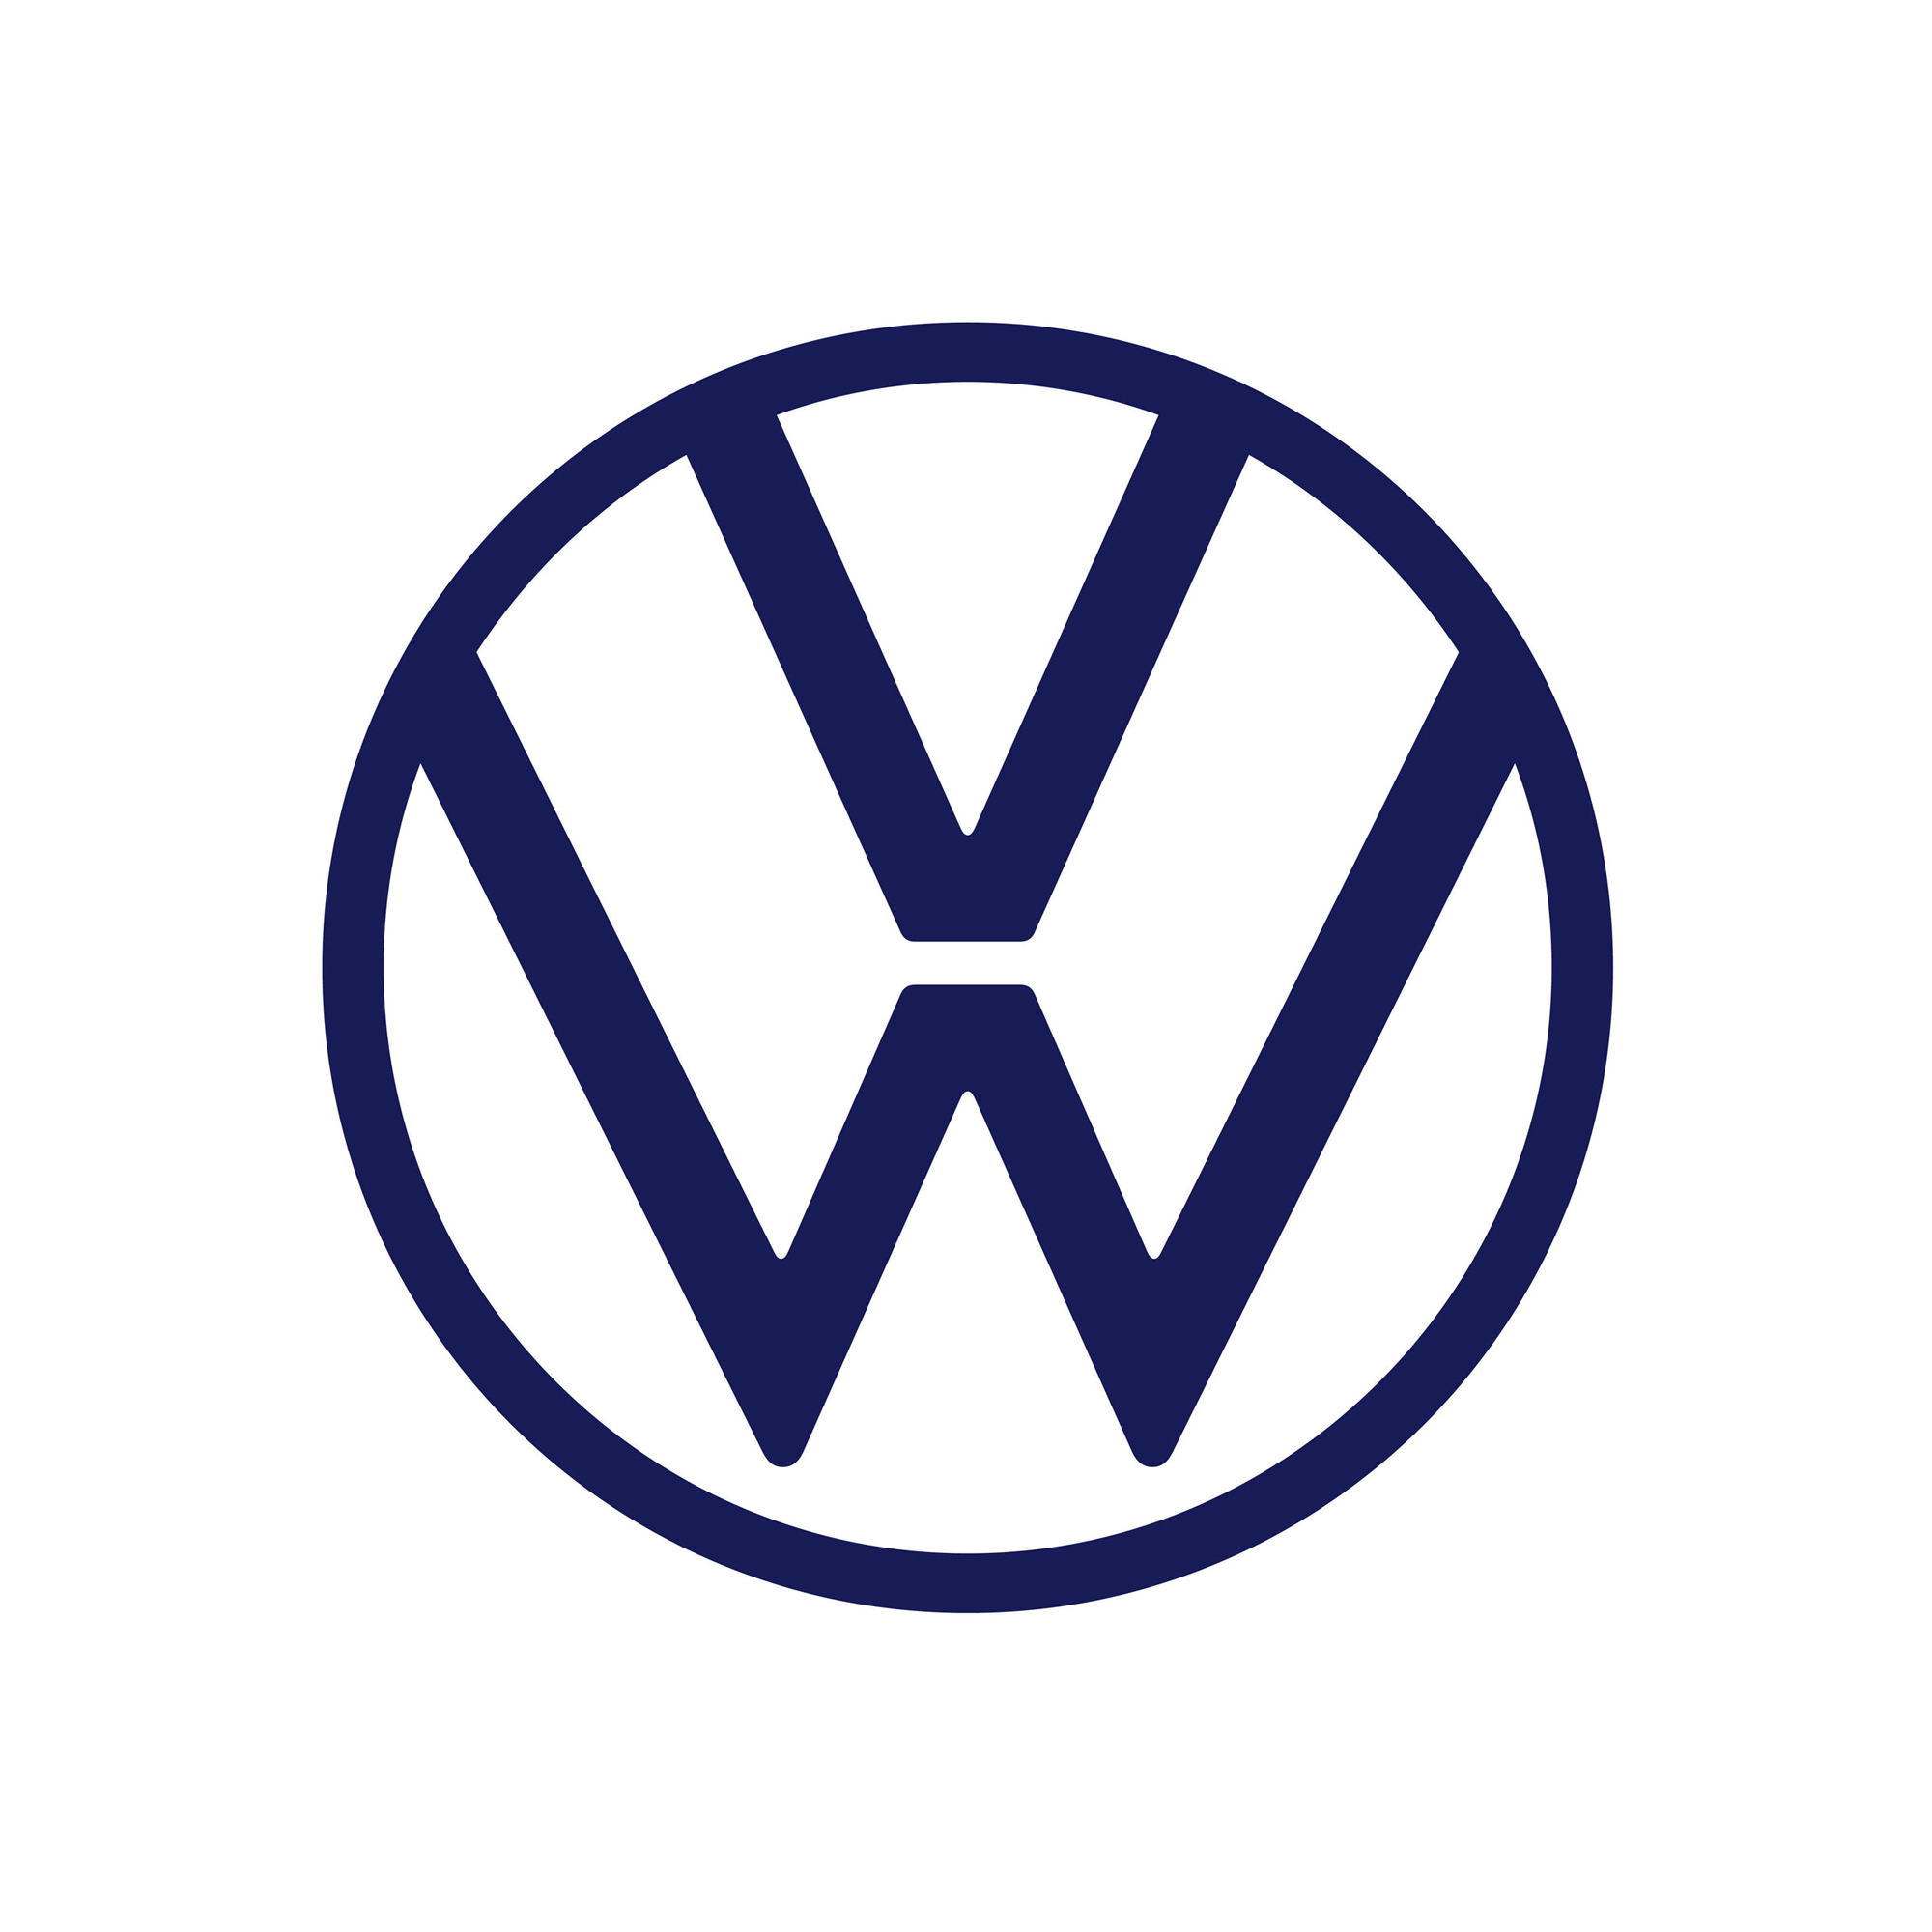 NEW？！クラシック？！VWが新しいロゴデザインを発表 | GAKUYA